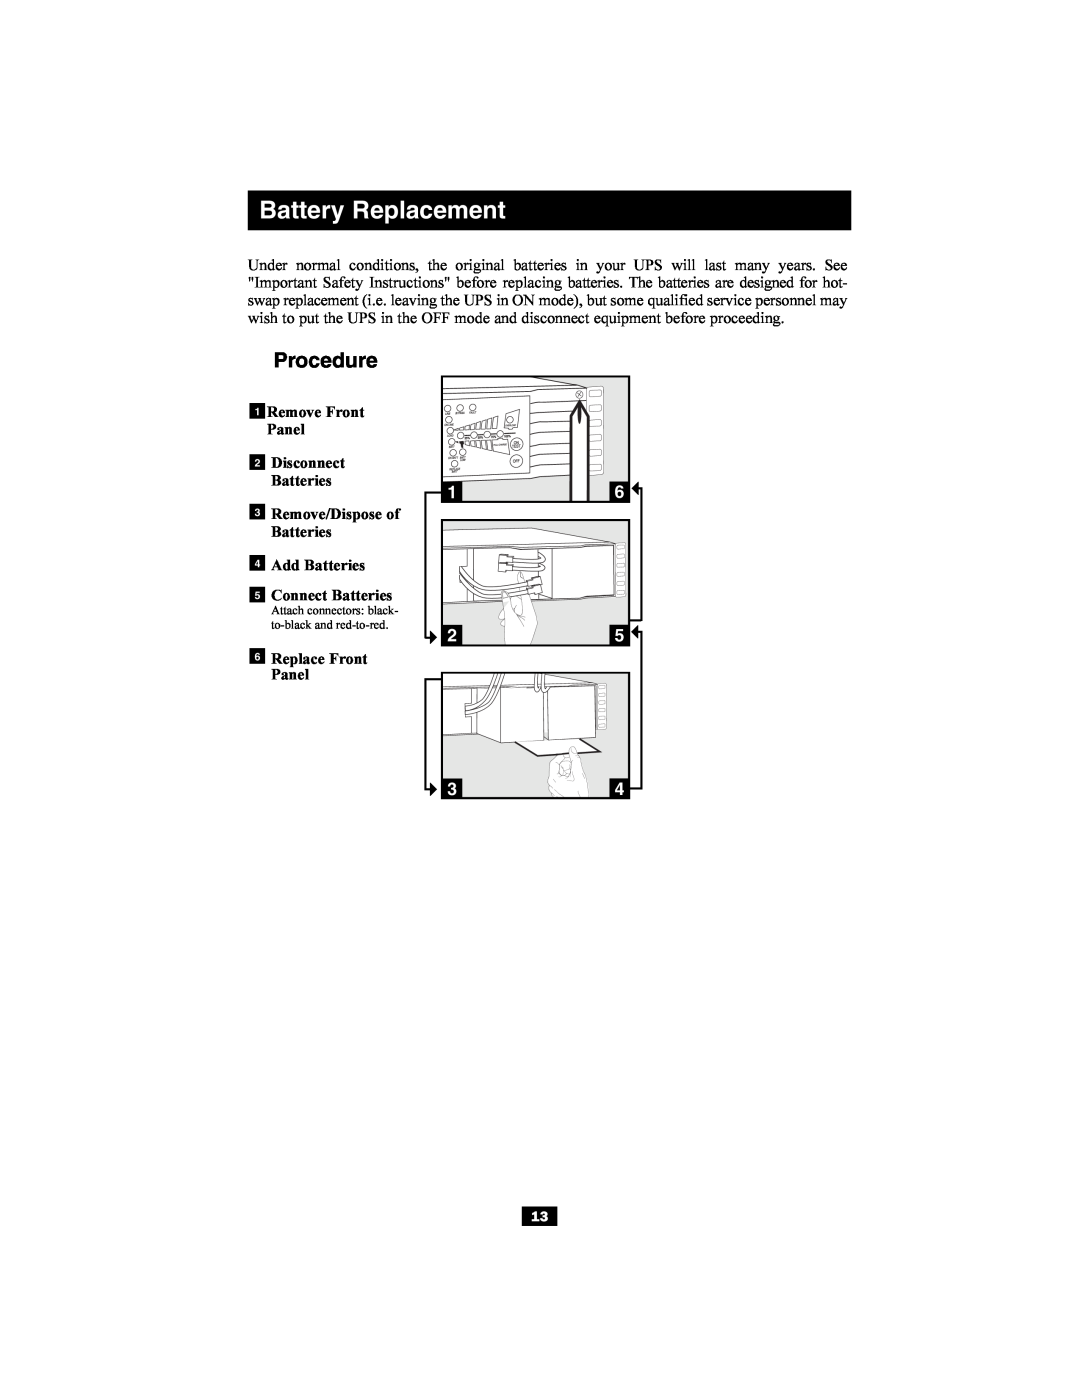 Tripp Lite 200703028, 93-2486 owner manual Procedure, Battery Replacement 